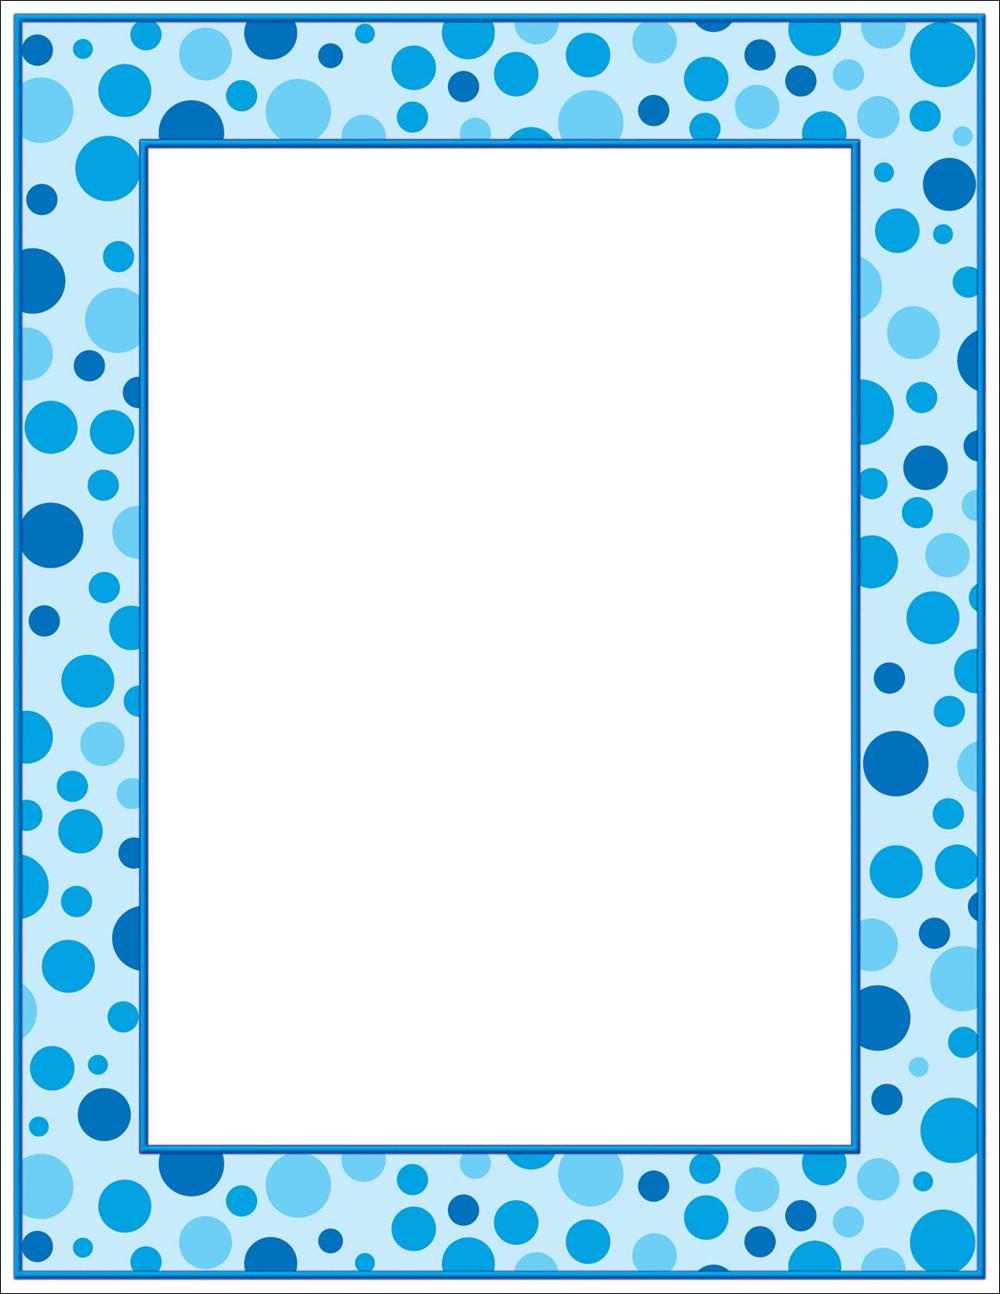 clip art borders polka dots - photo #13